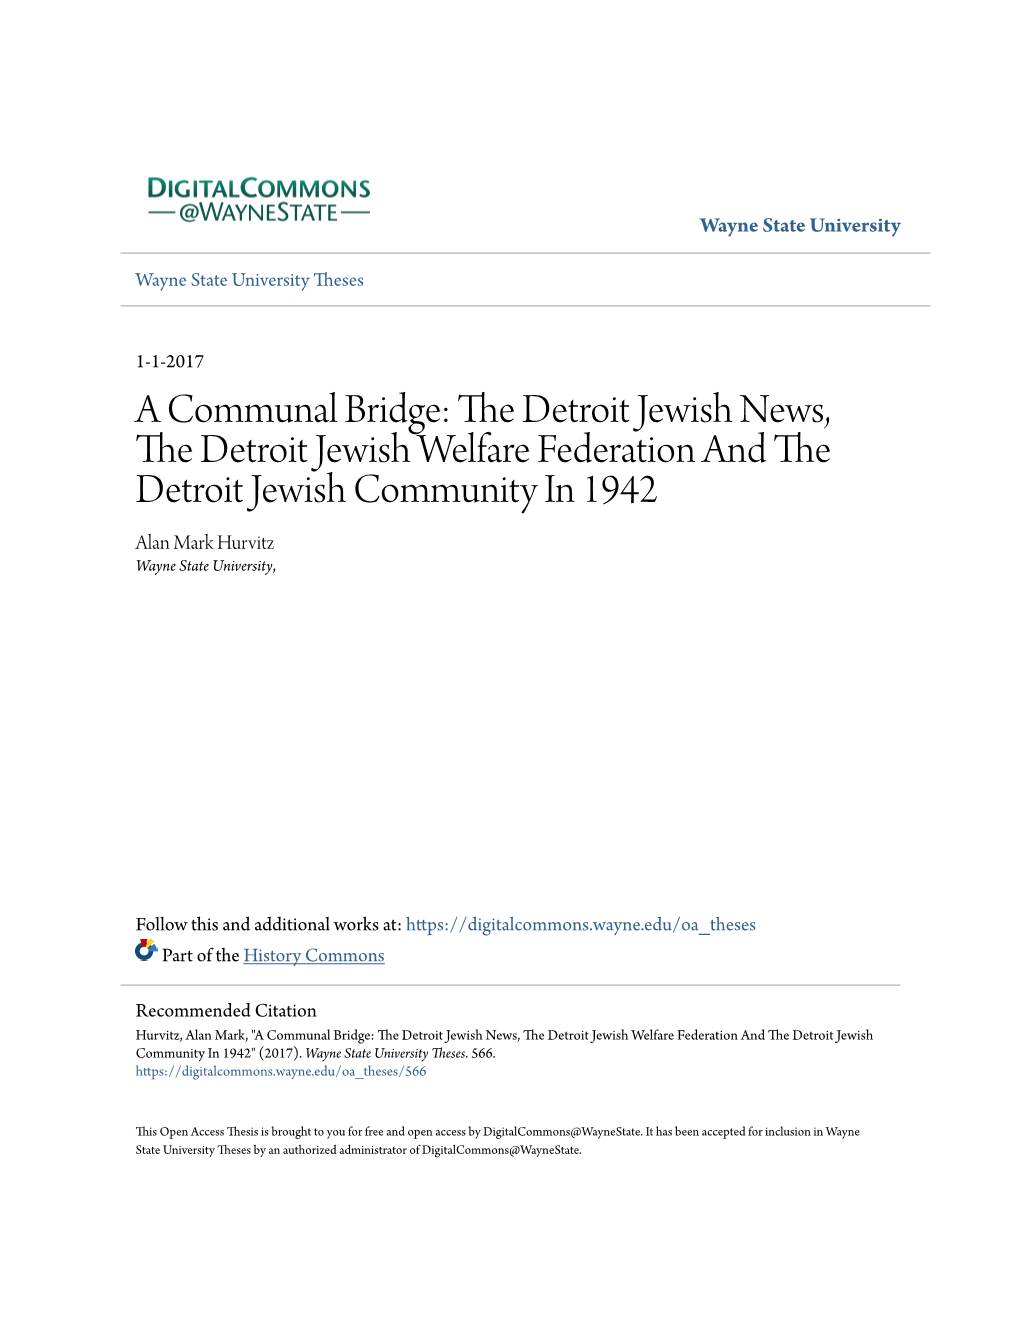 A Communal Bridge: the Detroit Jewish News, the Detroit Jewish Welfare Federation and the Detroit Jewish Community in 1942